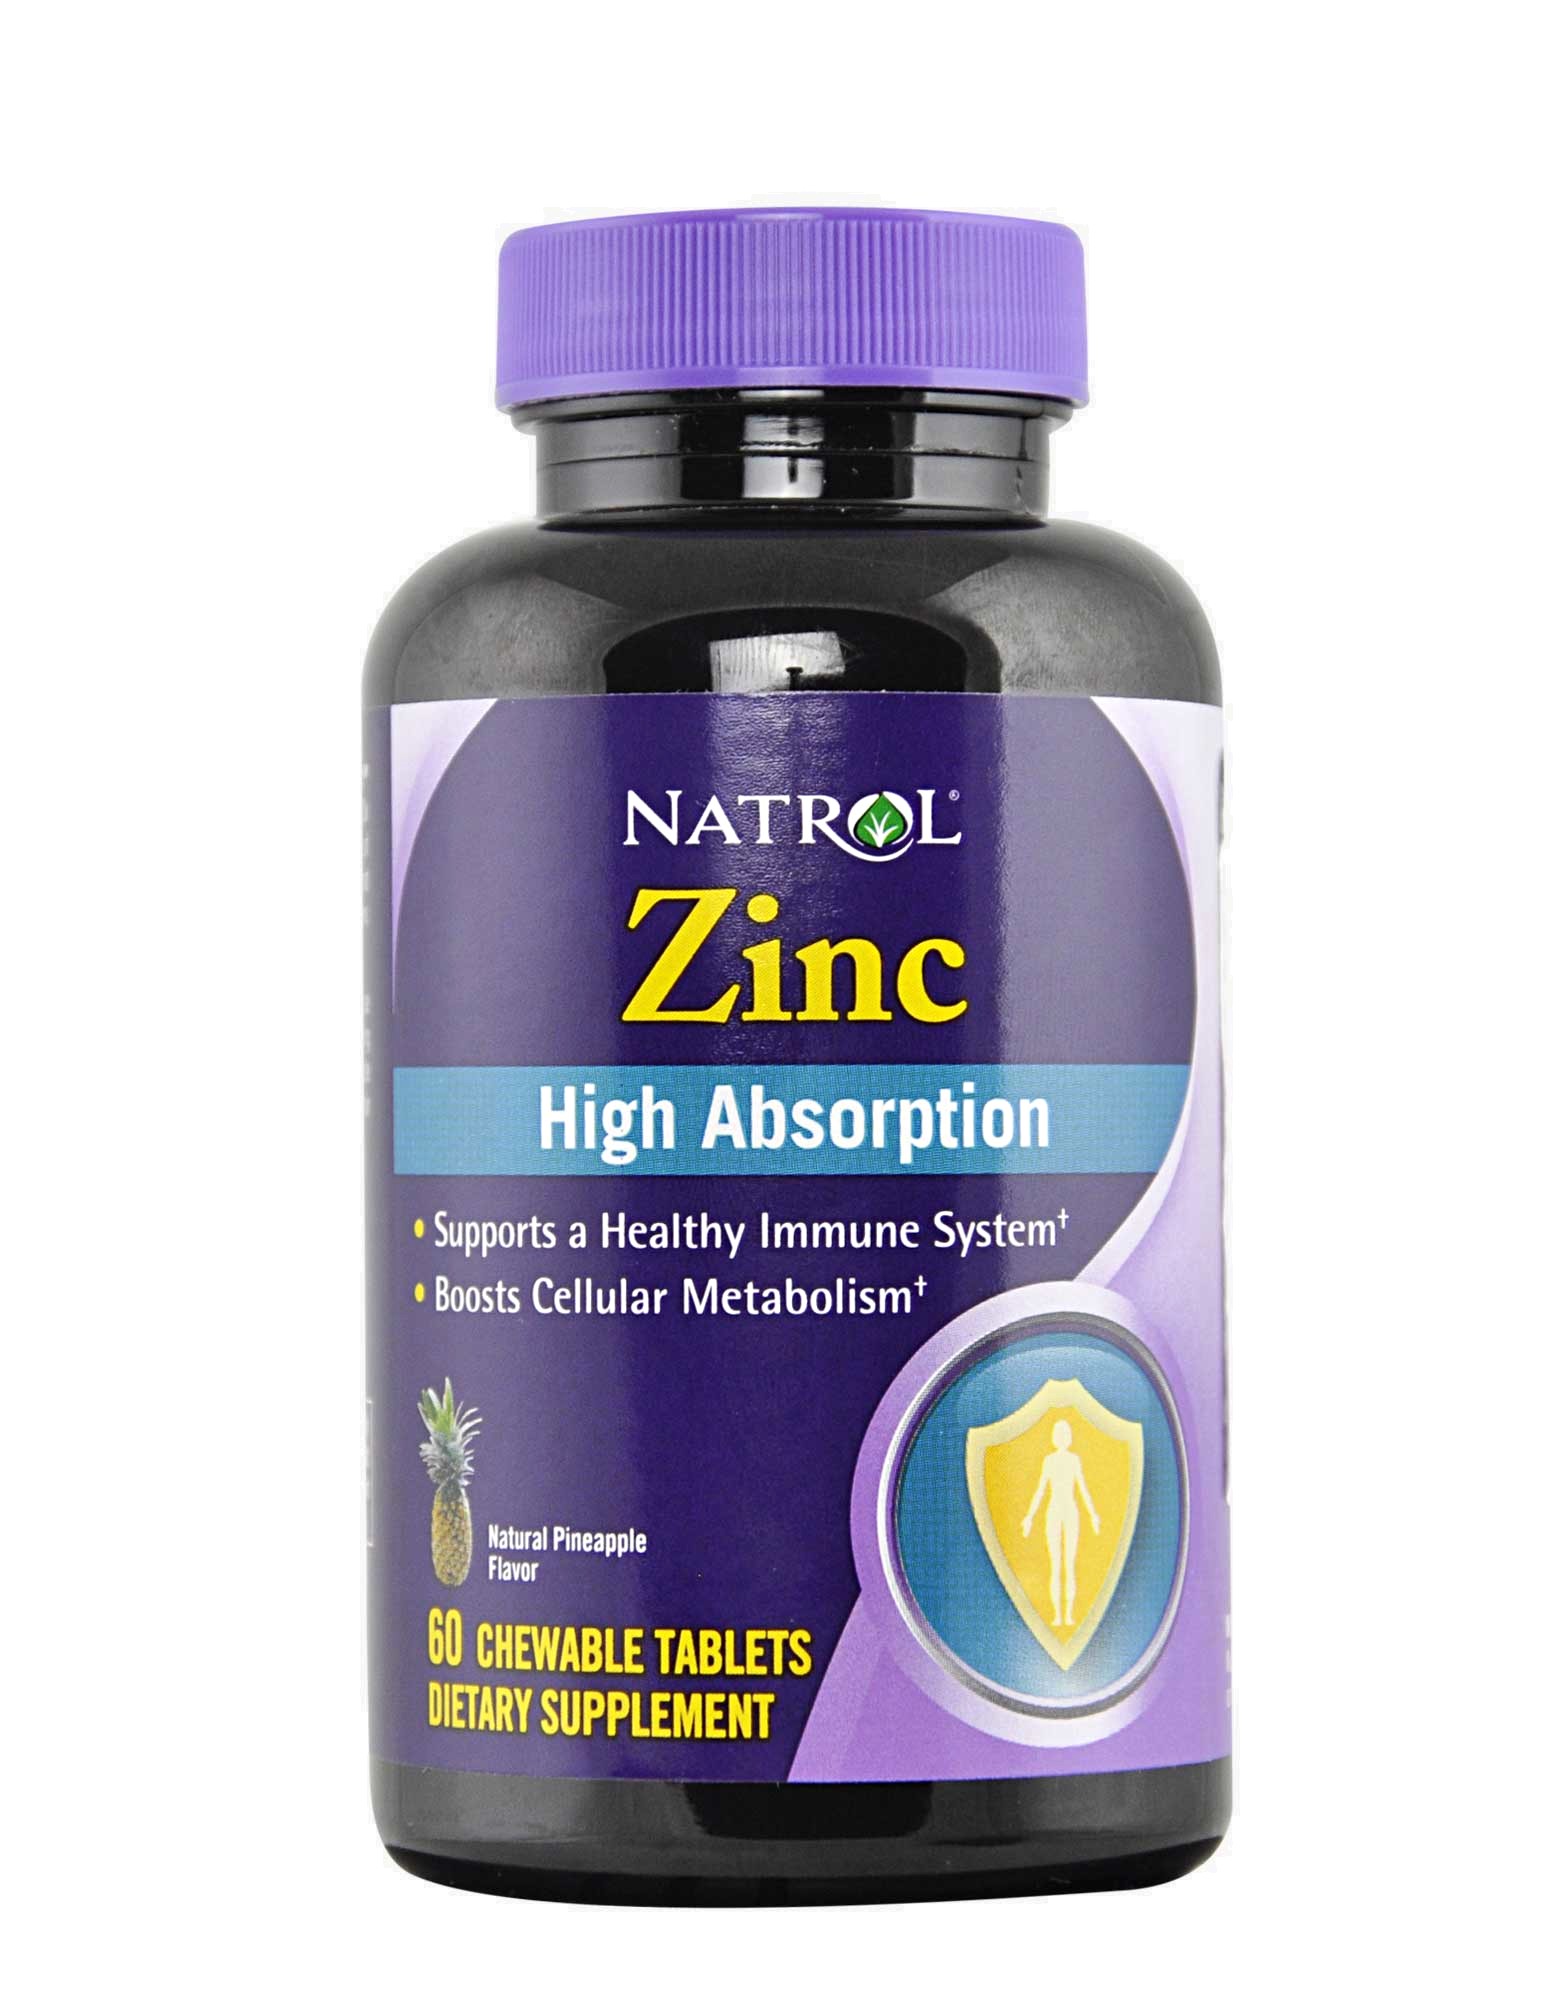 Zinc Supplement For Men : Zinc: Benefits for Men - TestoFuel Blog ...